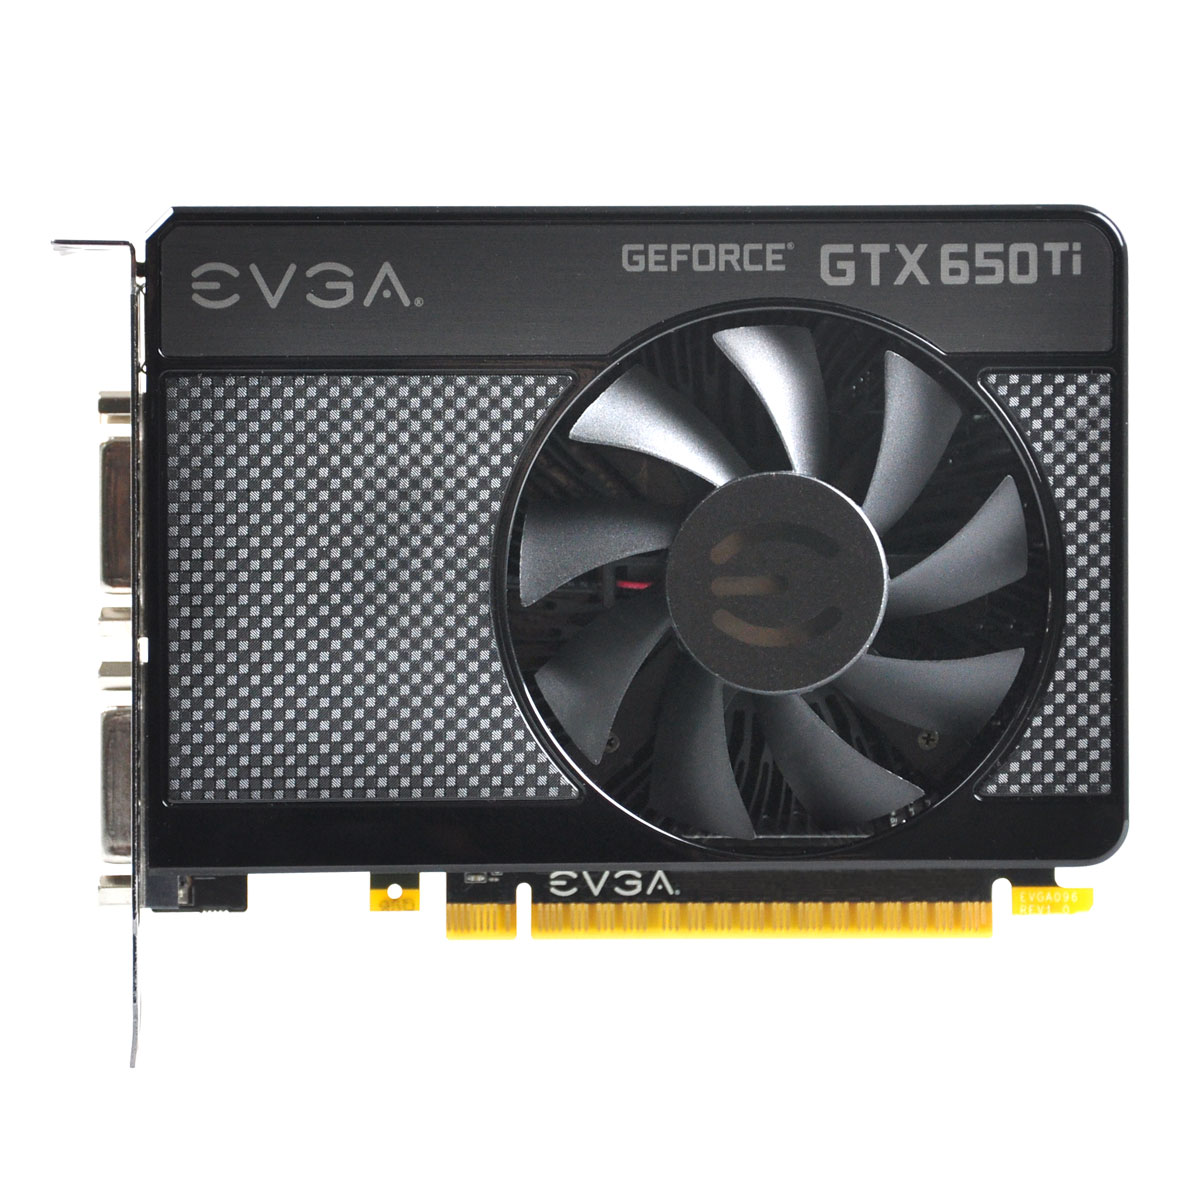 Buy EVGA GeForce GT 740 4GB Superclocked Graphics Card online Worldwide 